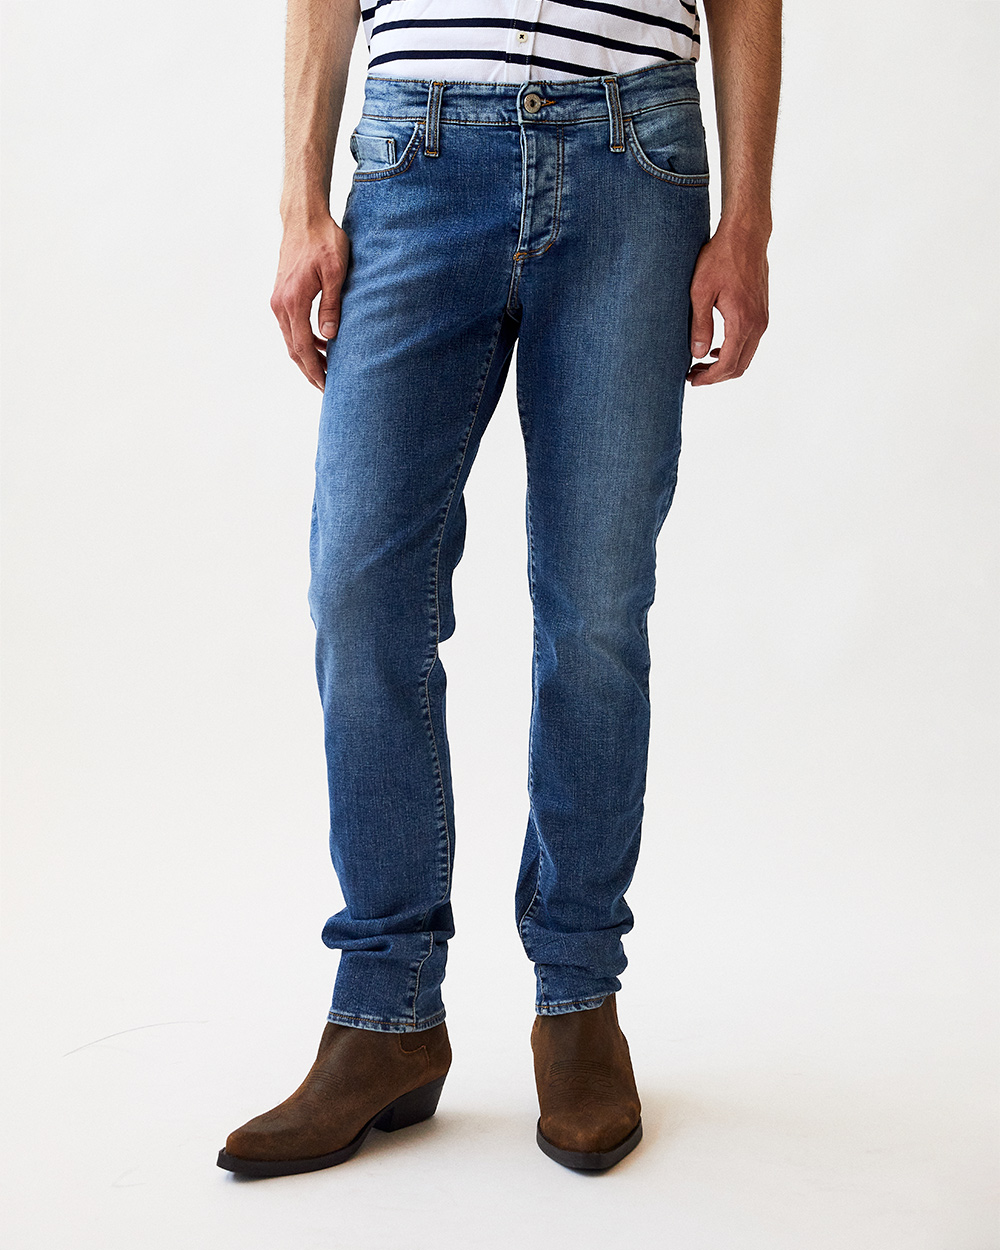 Shaft Jeans · SLIM 18 · Italian High Quality Denim and Apparel